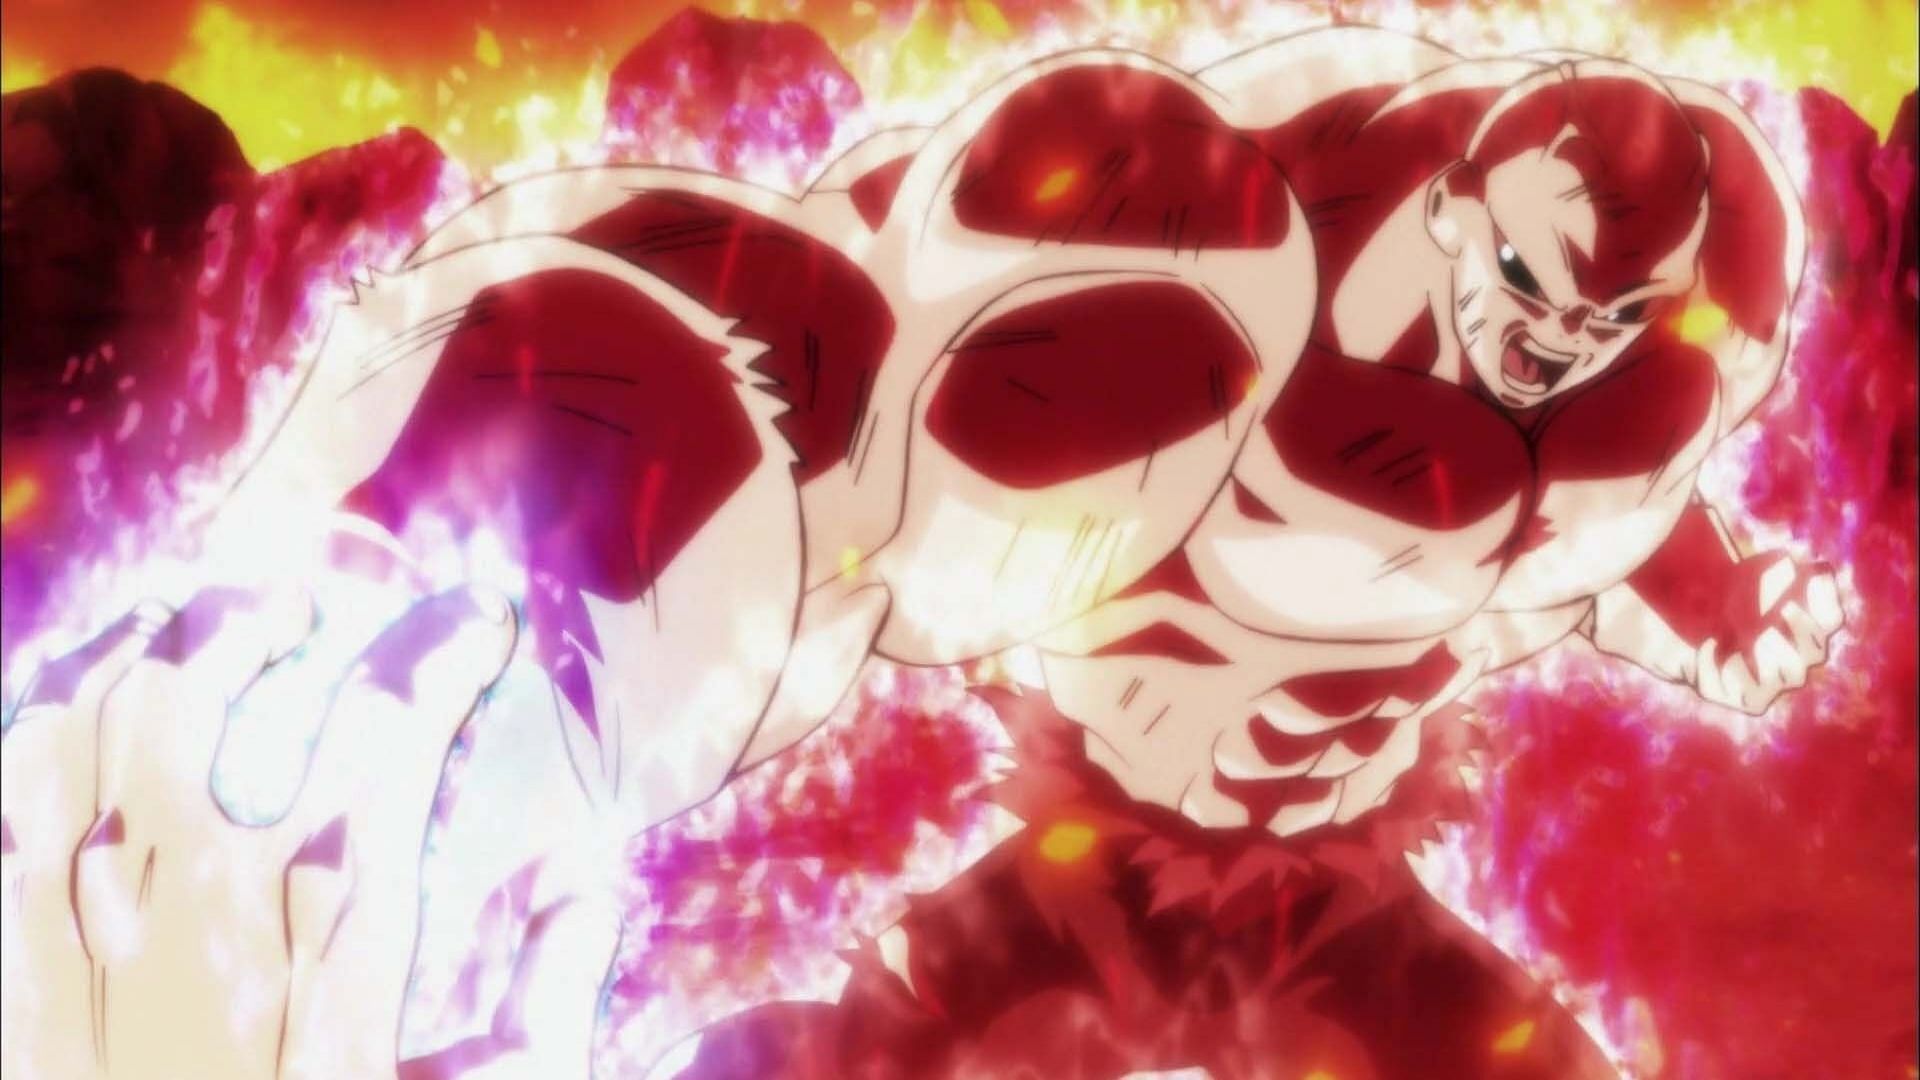 Jiren using his full power (Image via Toei Animation)